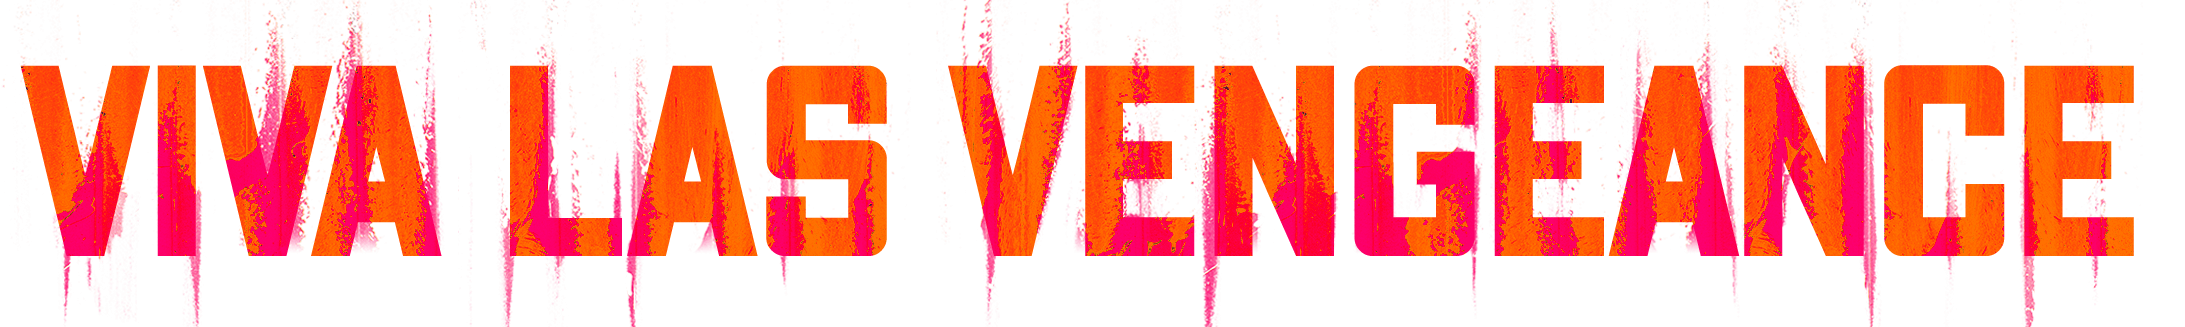 Army of the Dead - Viva Las Vengeance: A VR Experience - Washington DC Logo